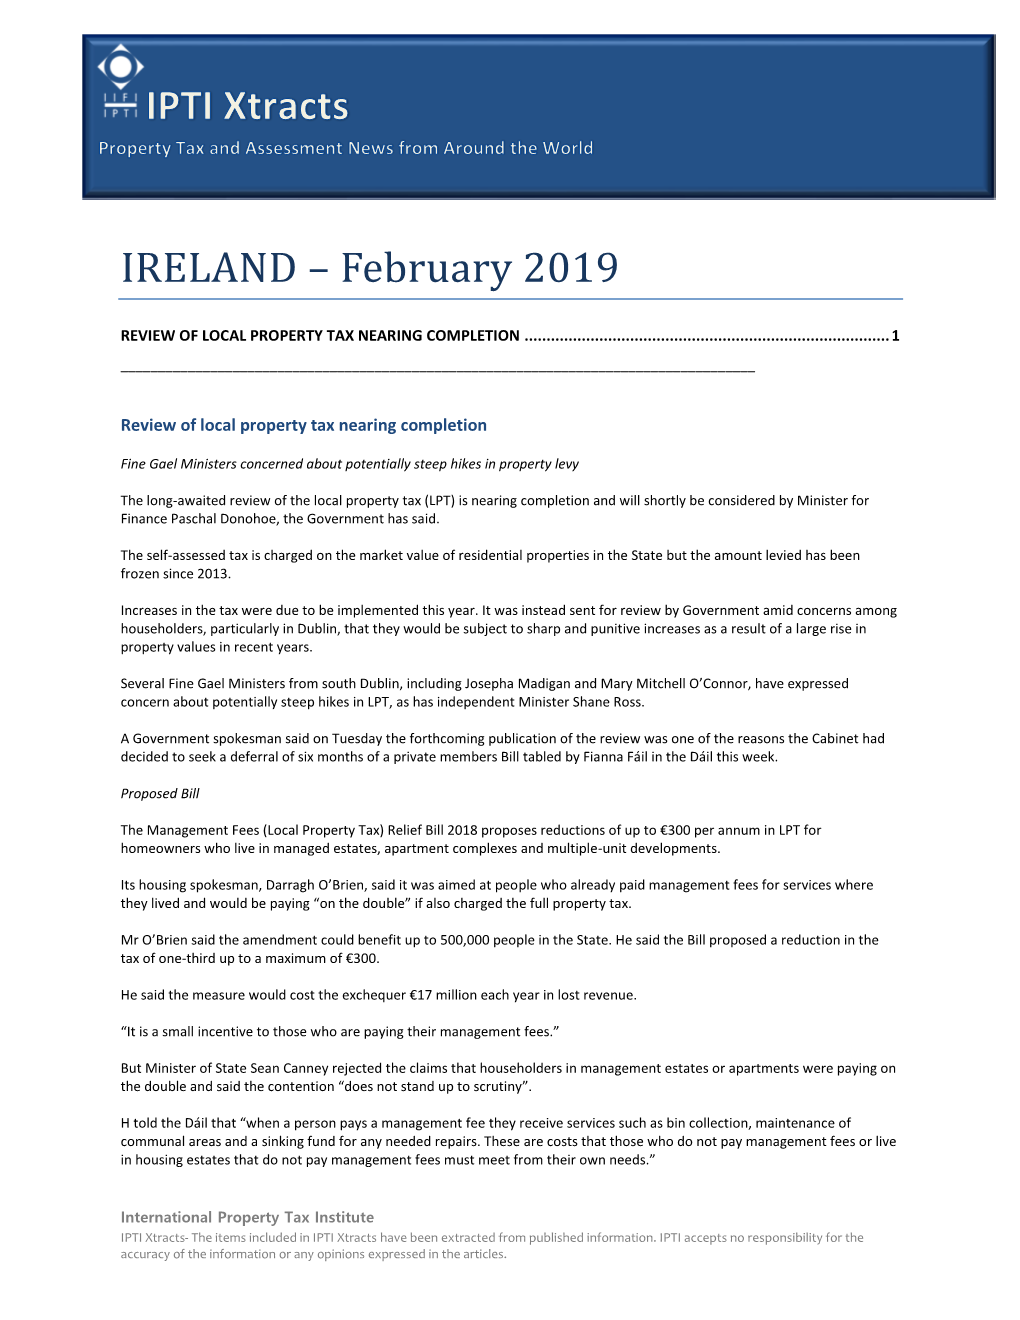 IRELAND – February 2019